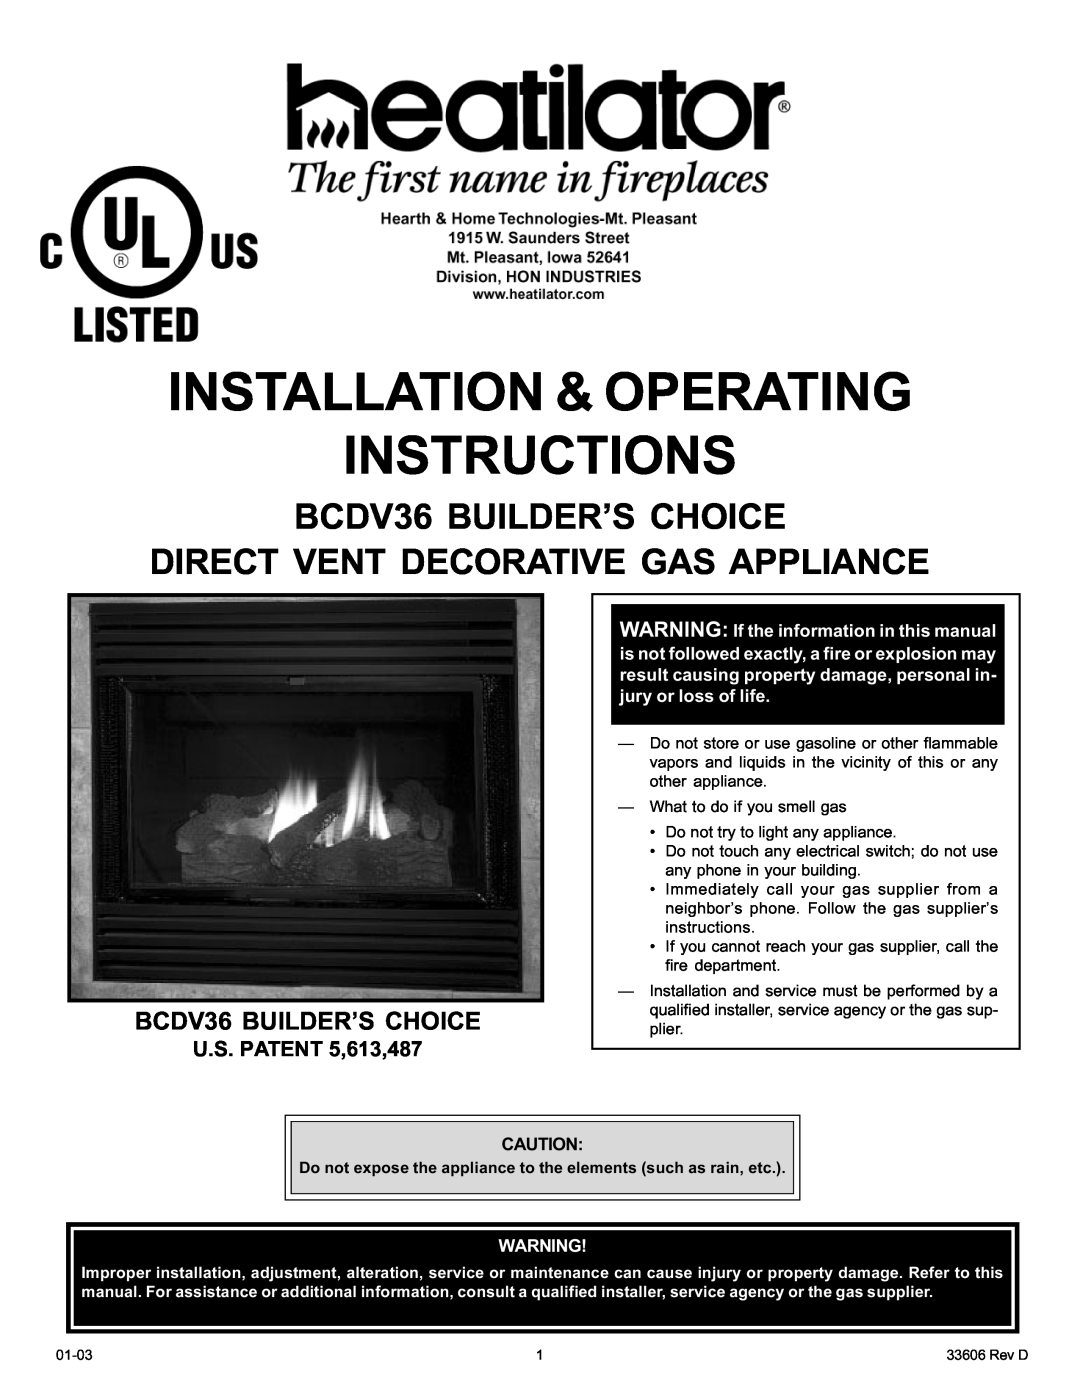 Heatiator manual BCDV36 BUILDER’S CHOICE, U.S. PATENT 5,613,487, Installation & Operating Instructions 